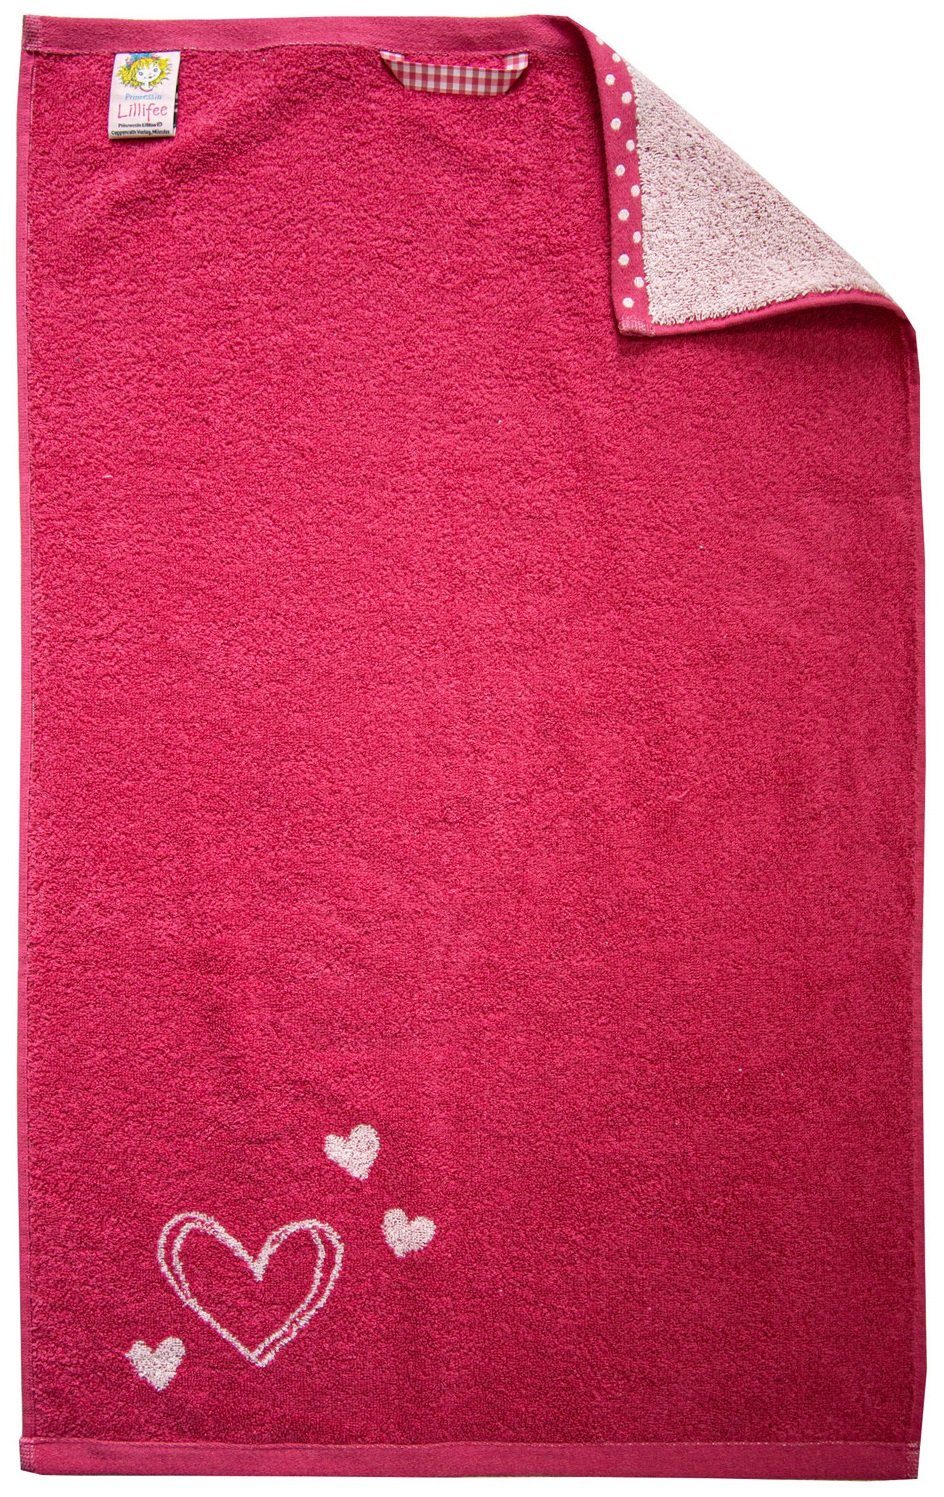 Dyckhoff Handtuch Dyckhoff Kinderfrottierserie 'Lillifee' Handtuch 50 x 70 cm Pink